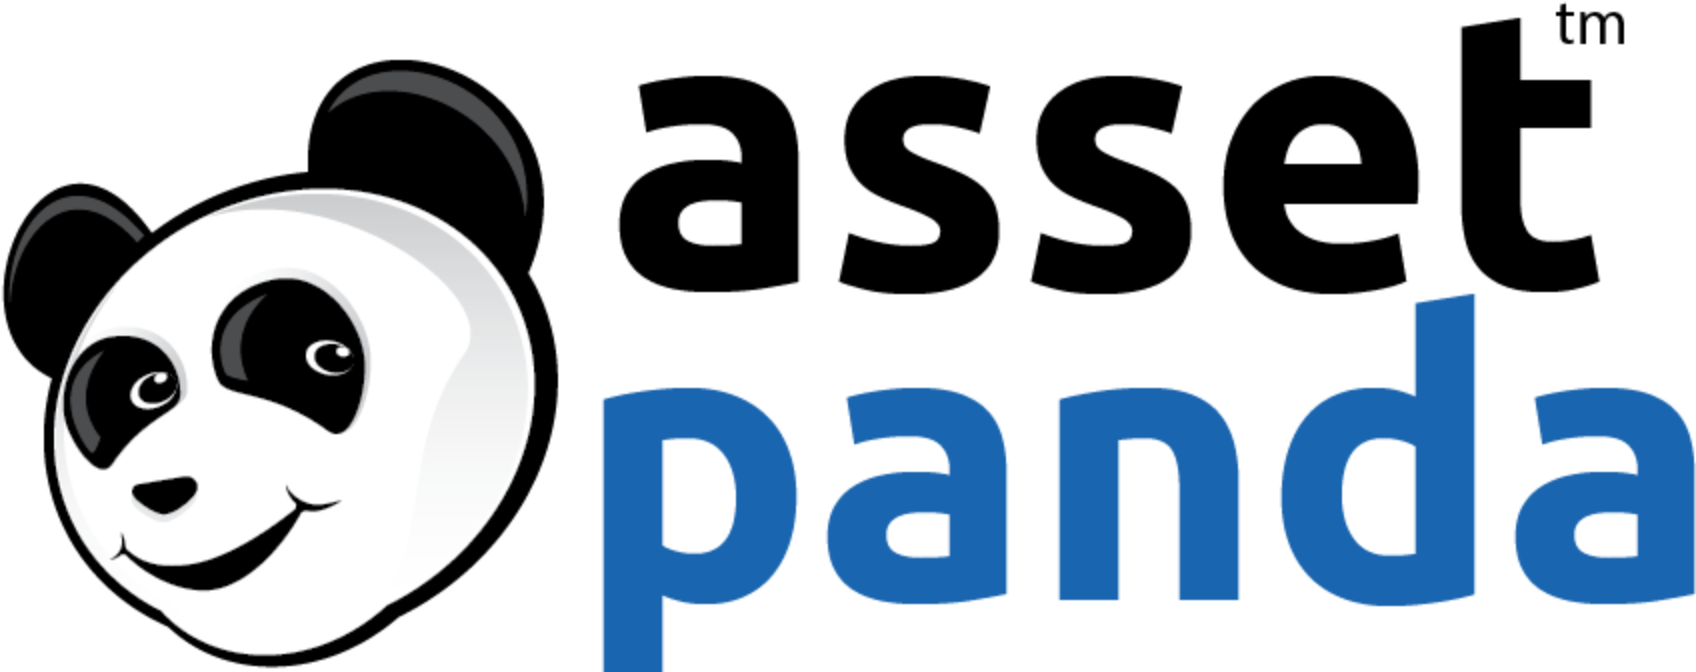 Bitmap panda logo